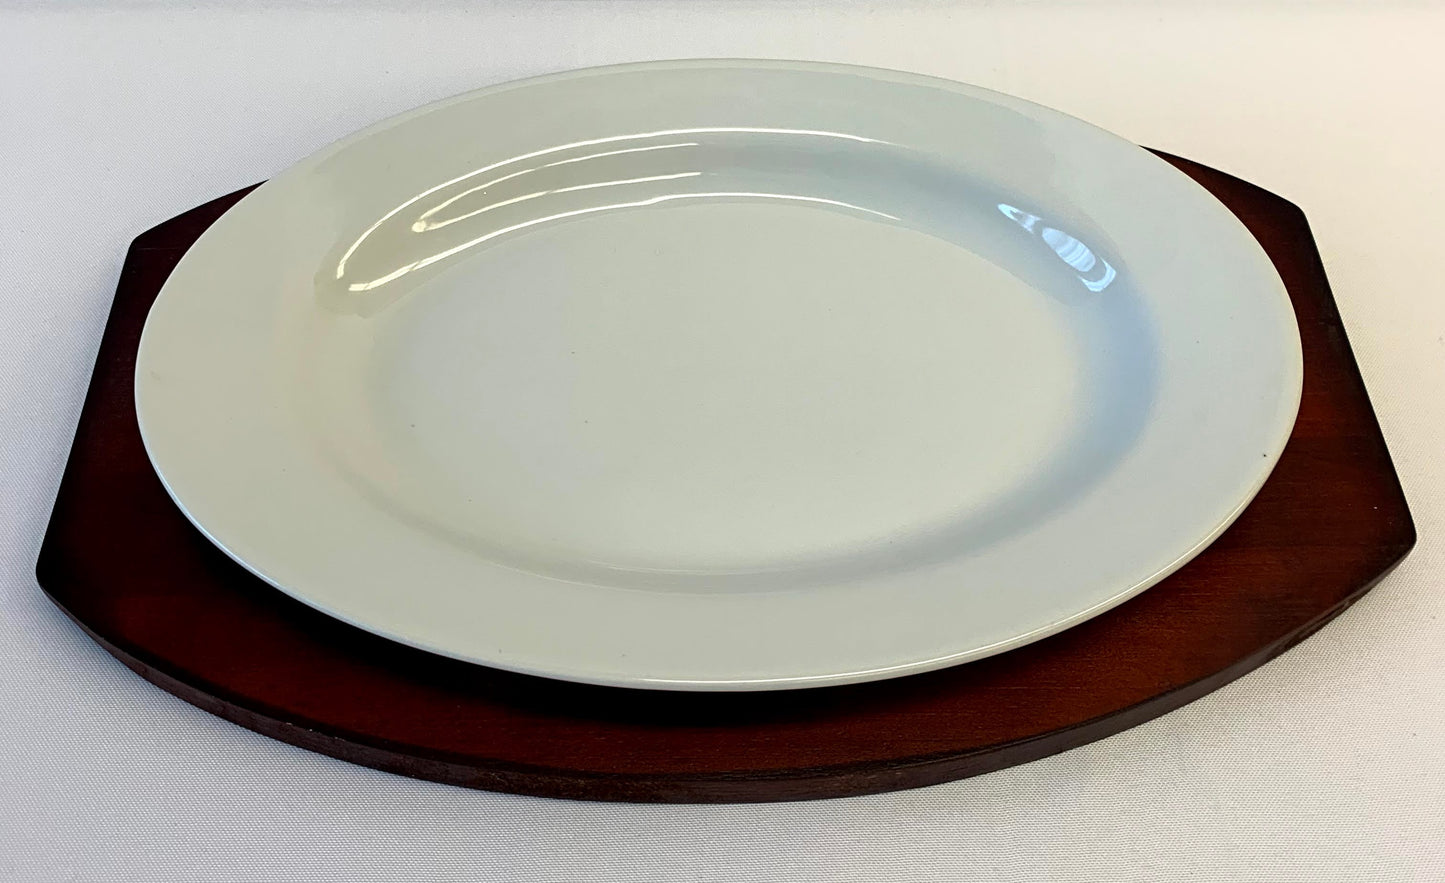 Wooden Oval Platter